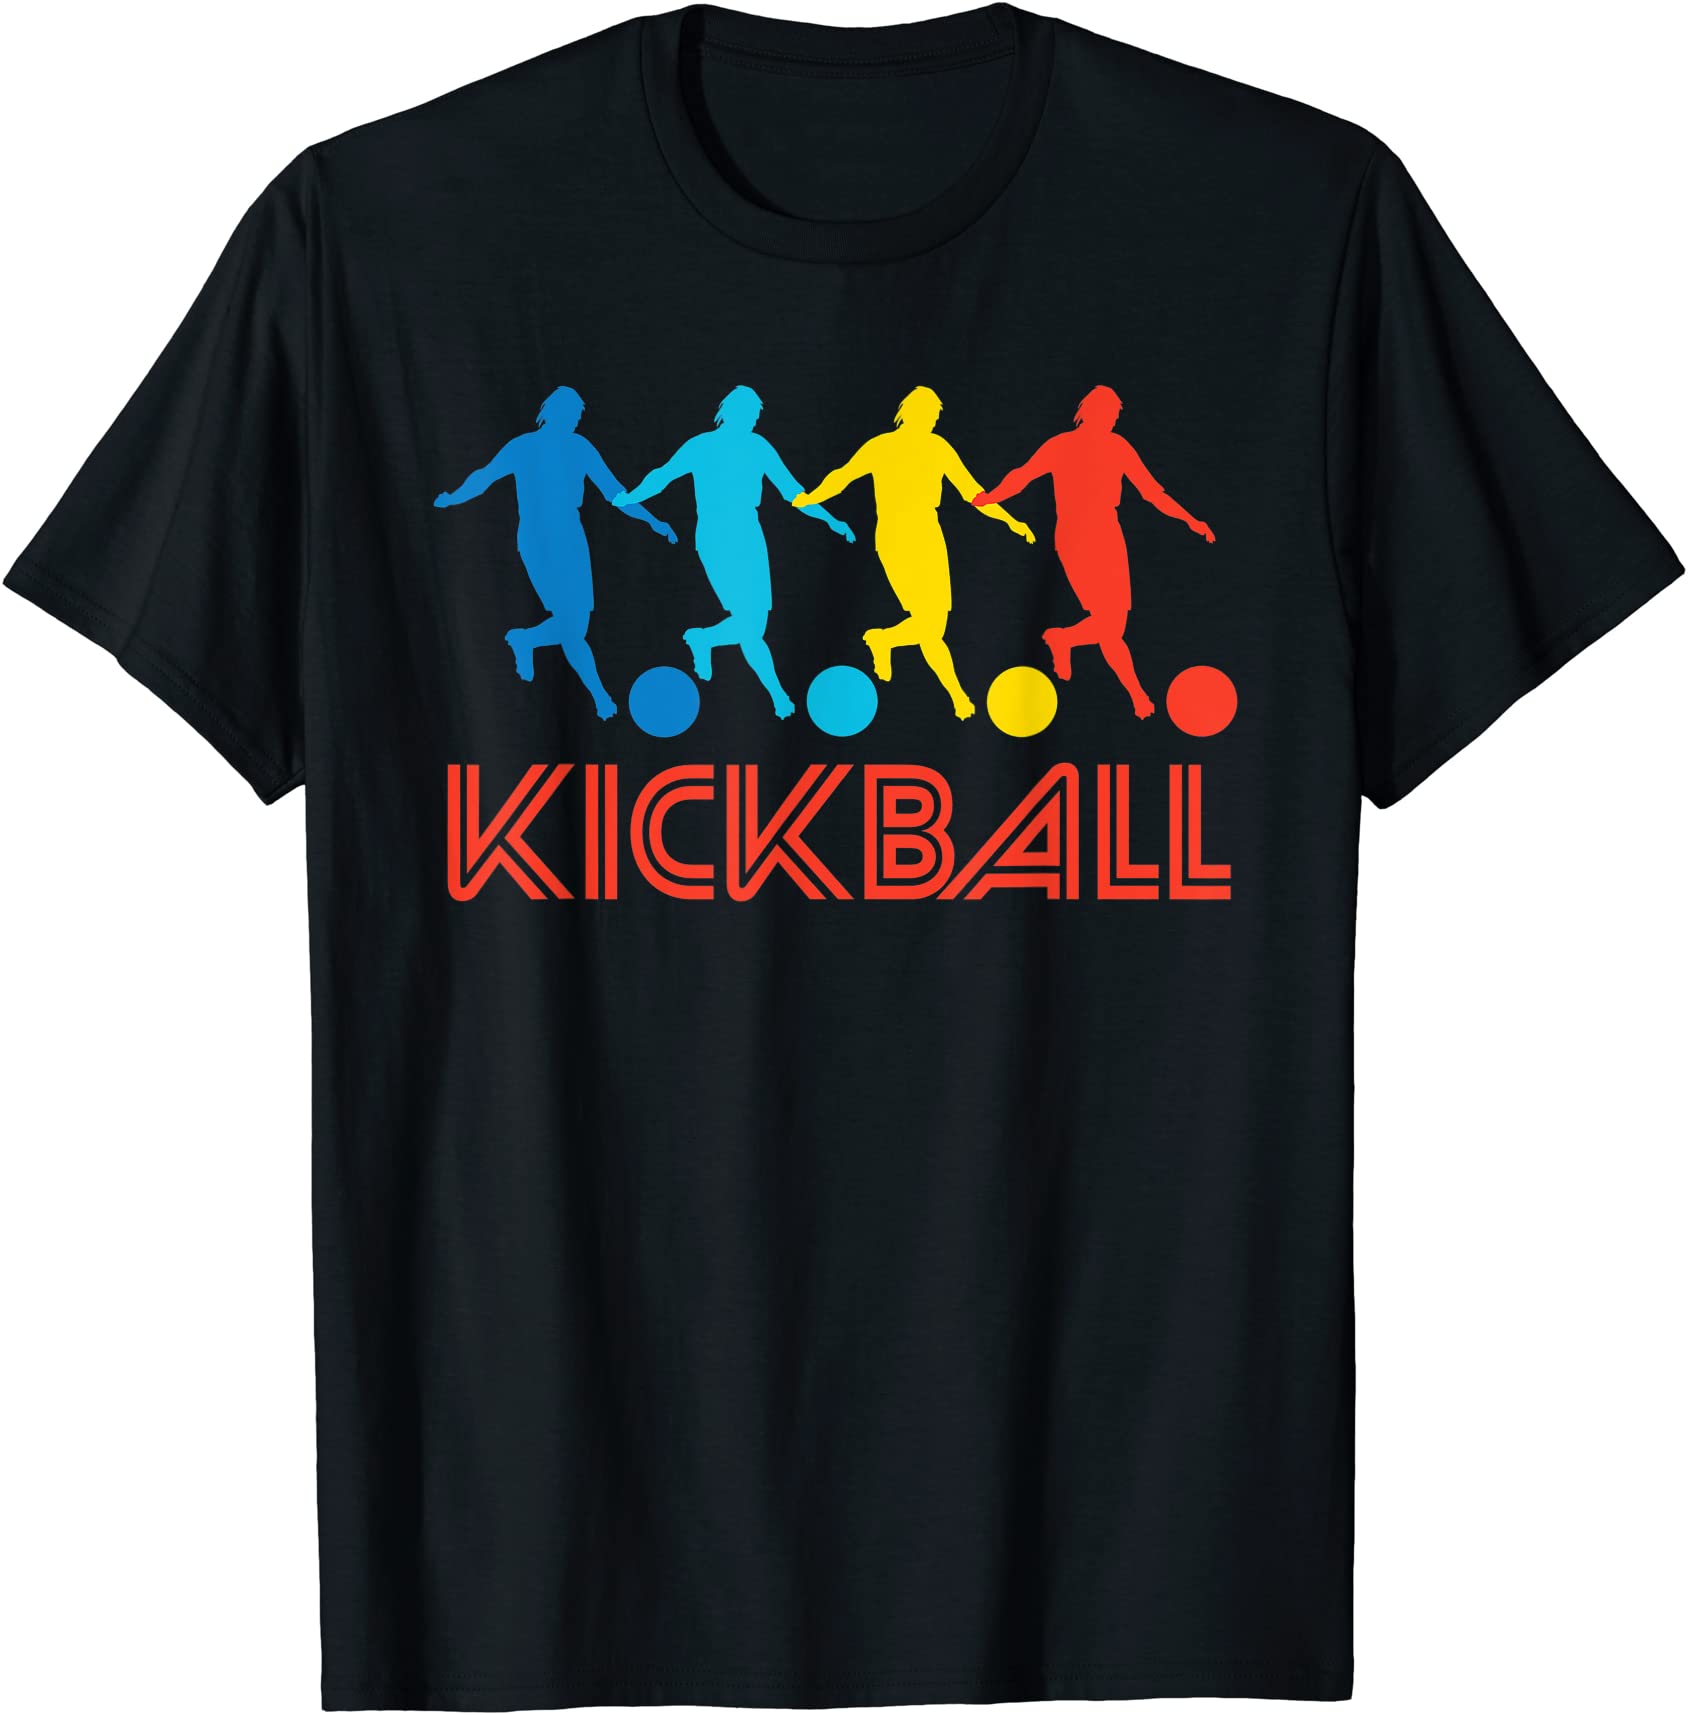 Kickball Player Retro Pop Art Kickball Graphic T Shirt Men Buy T Shirt Designs